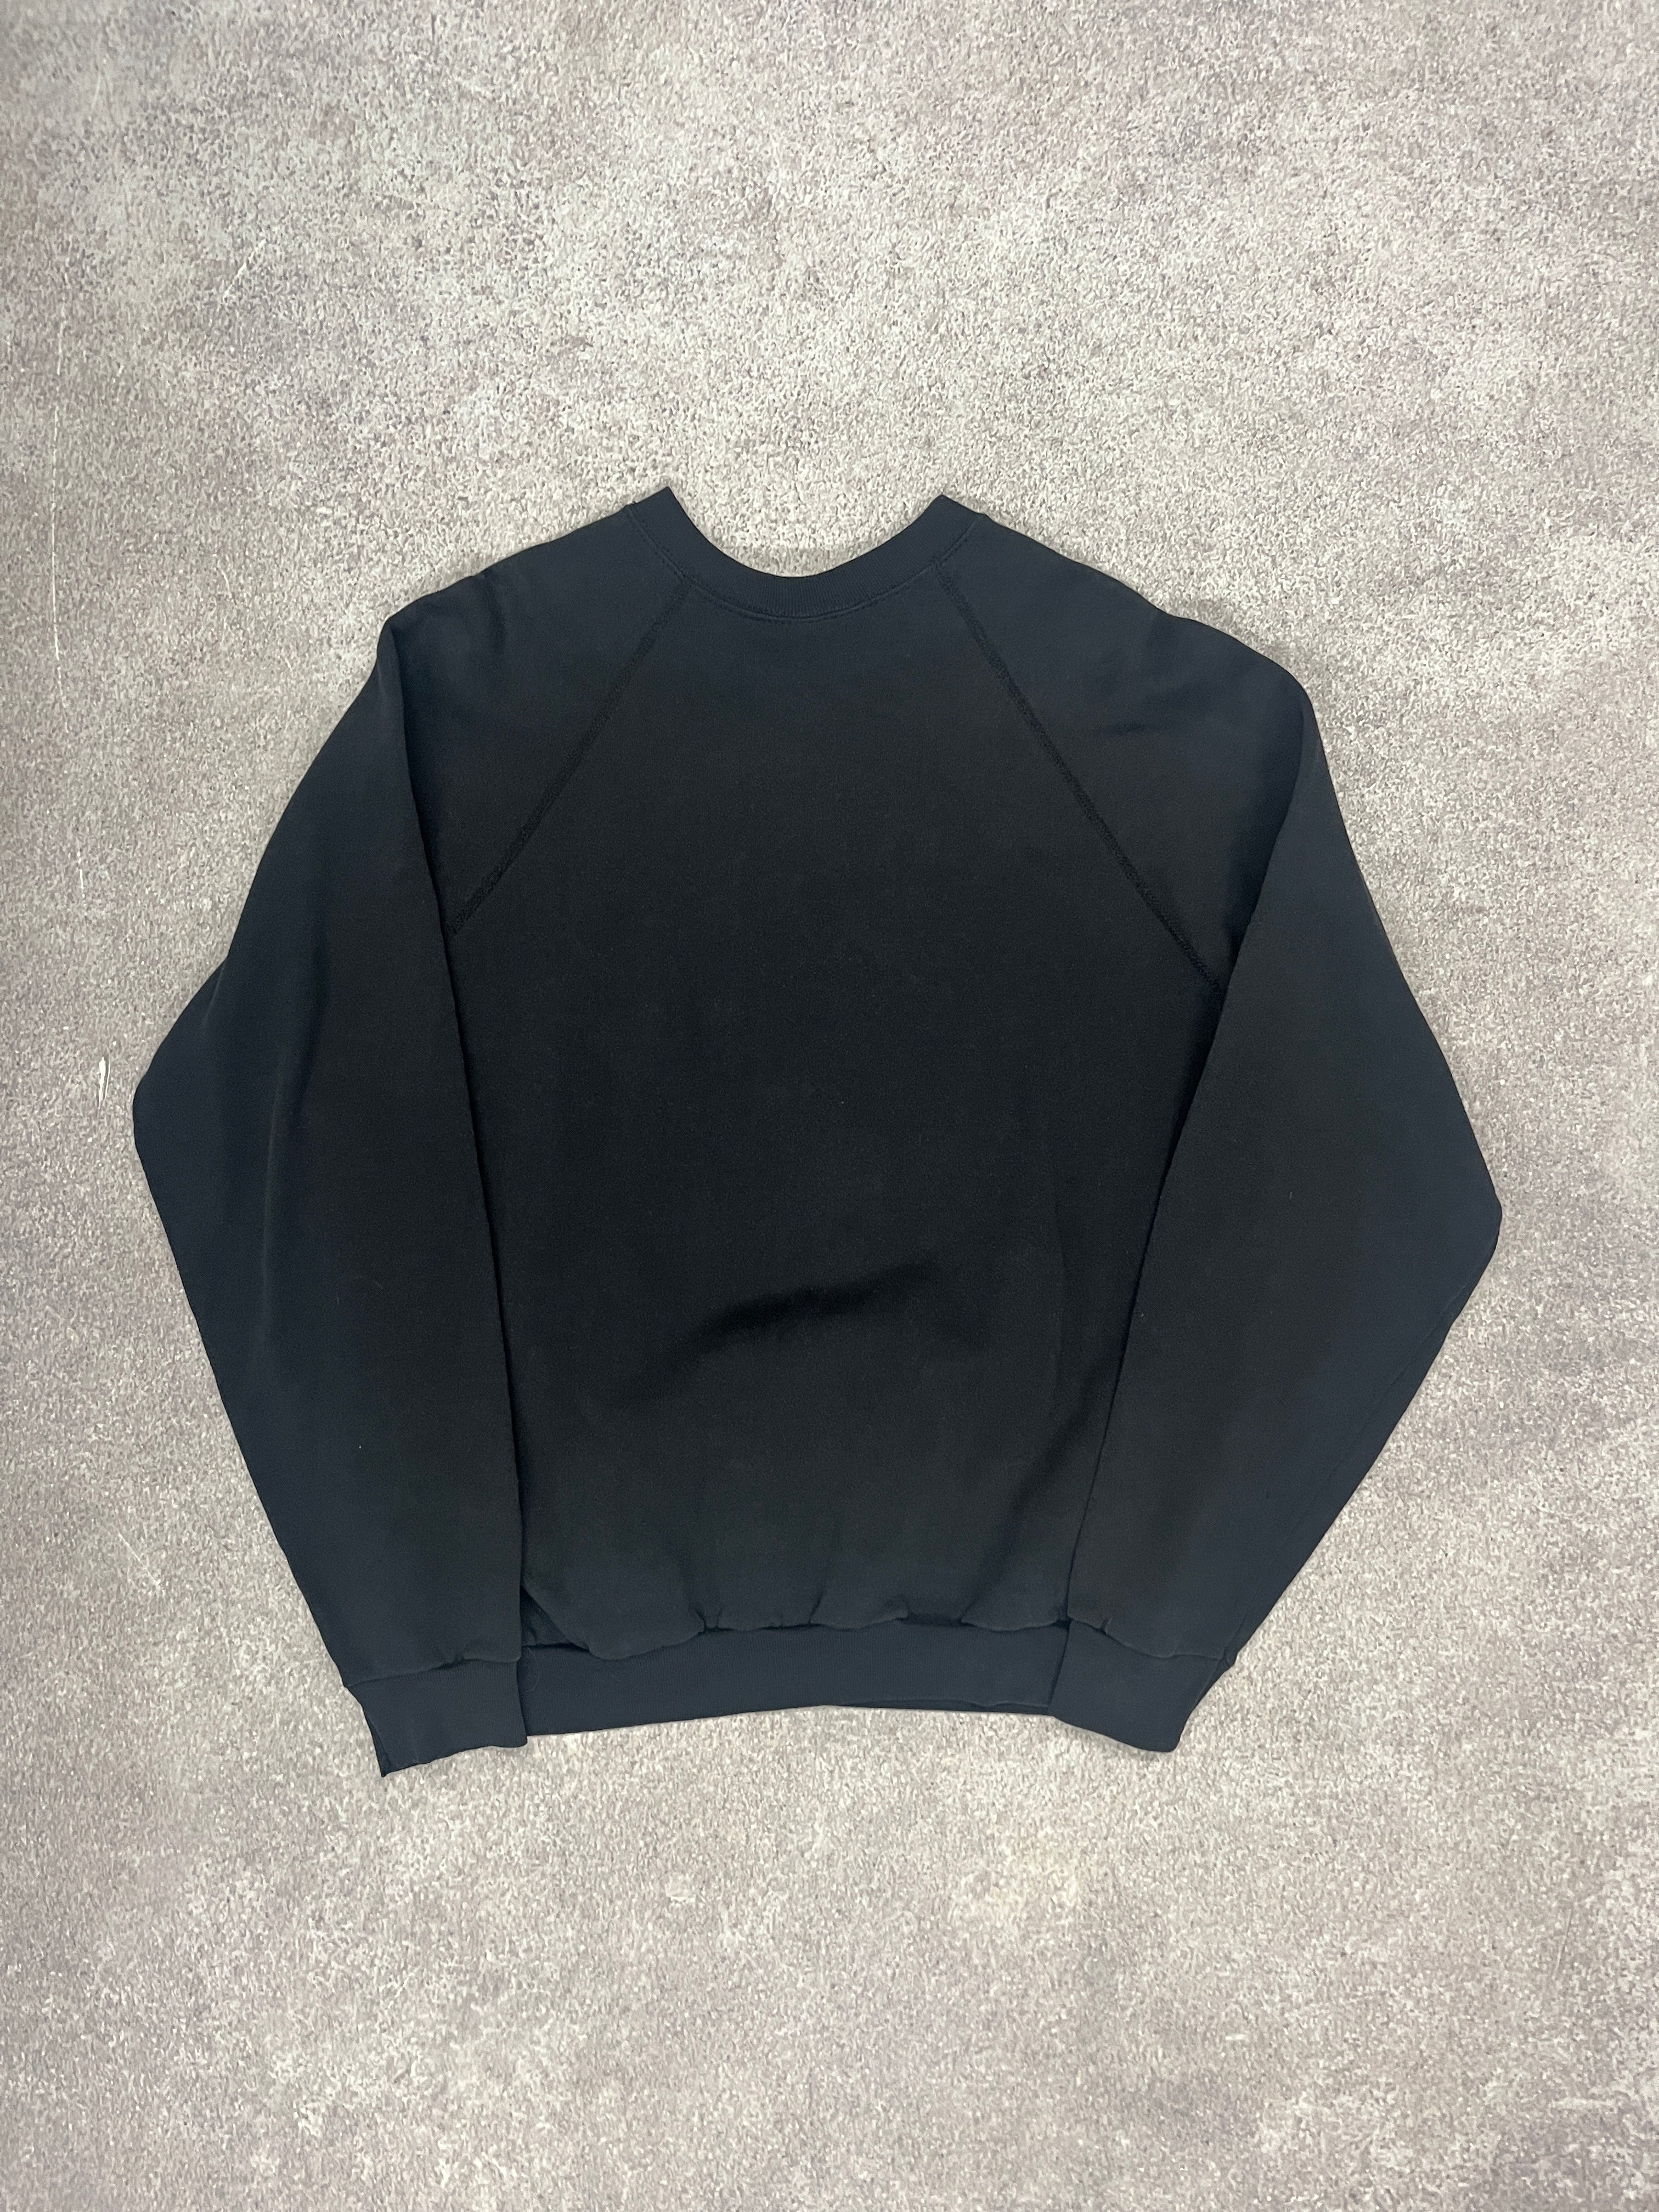 Vintage Russell Blank Sweater Black // Medium - RHAGHOUSE VINTAGE